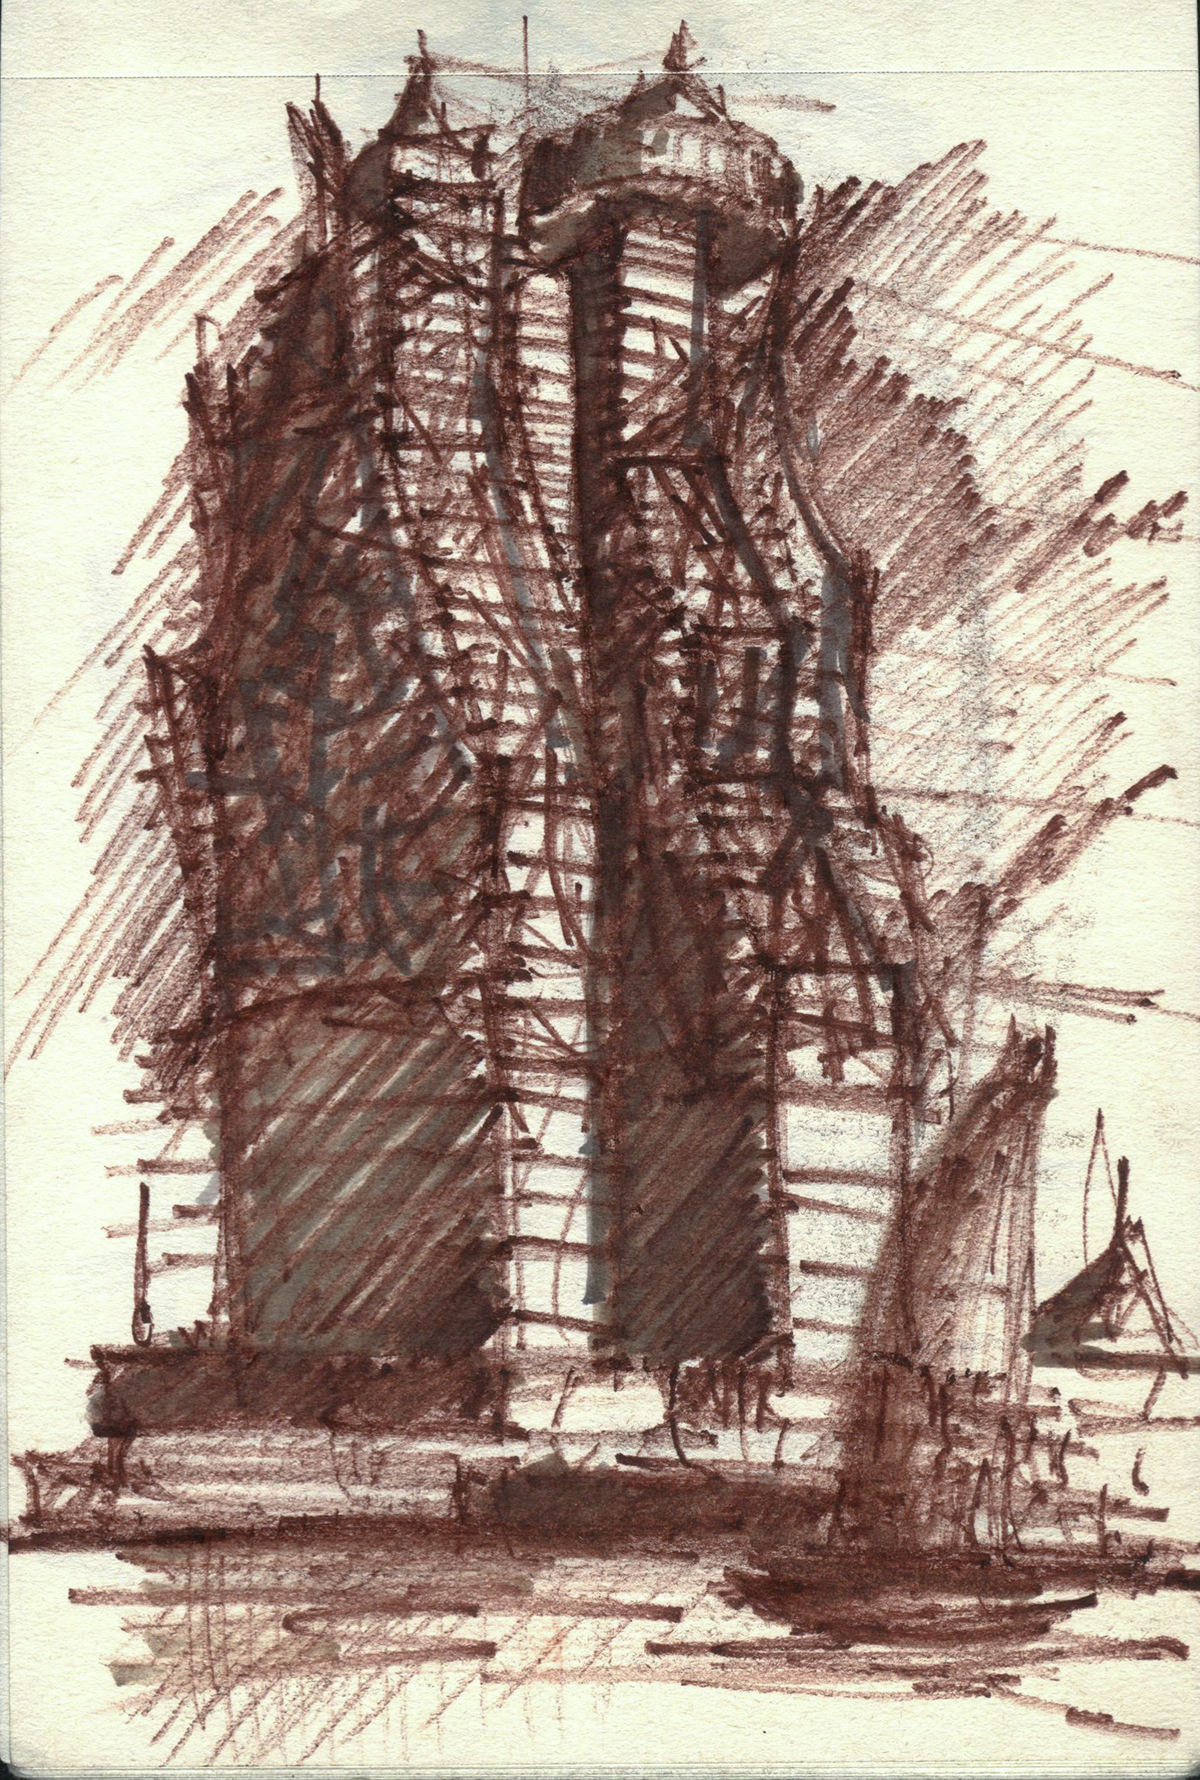 sketch scribble pen ink Draft mosque Cat building design think Abdelhalim-CDC ornaments details Minarets Baalbak